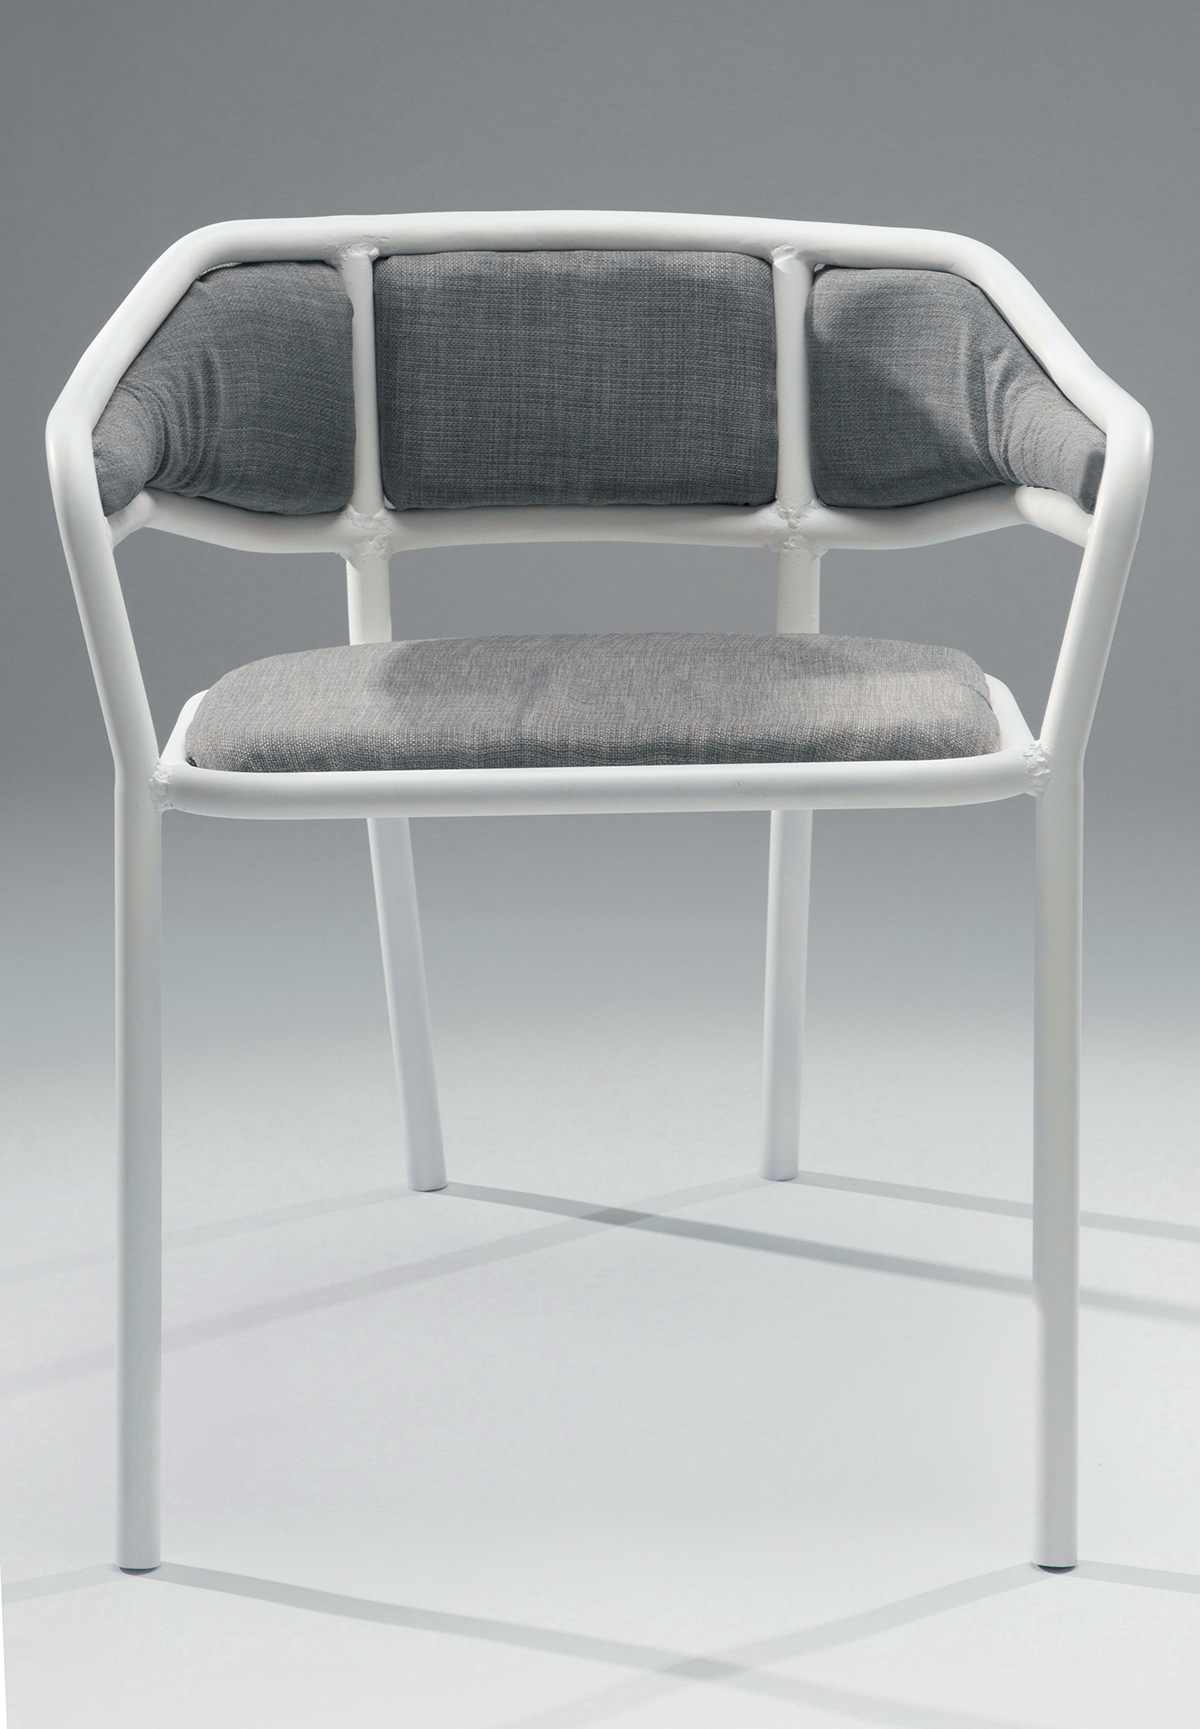 steel tube chair fabric seat